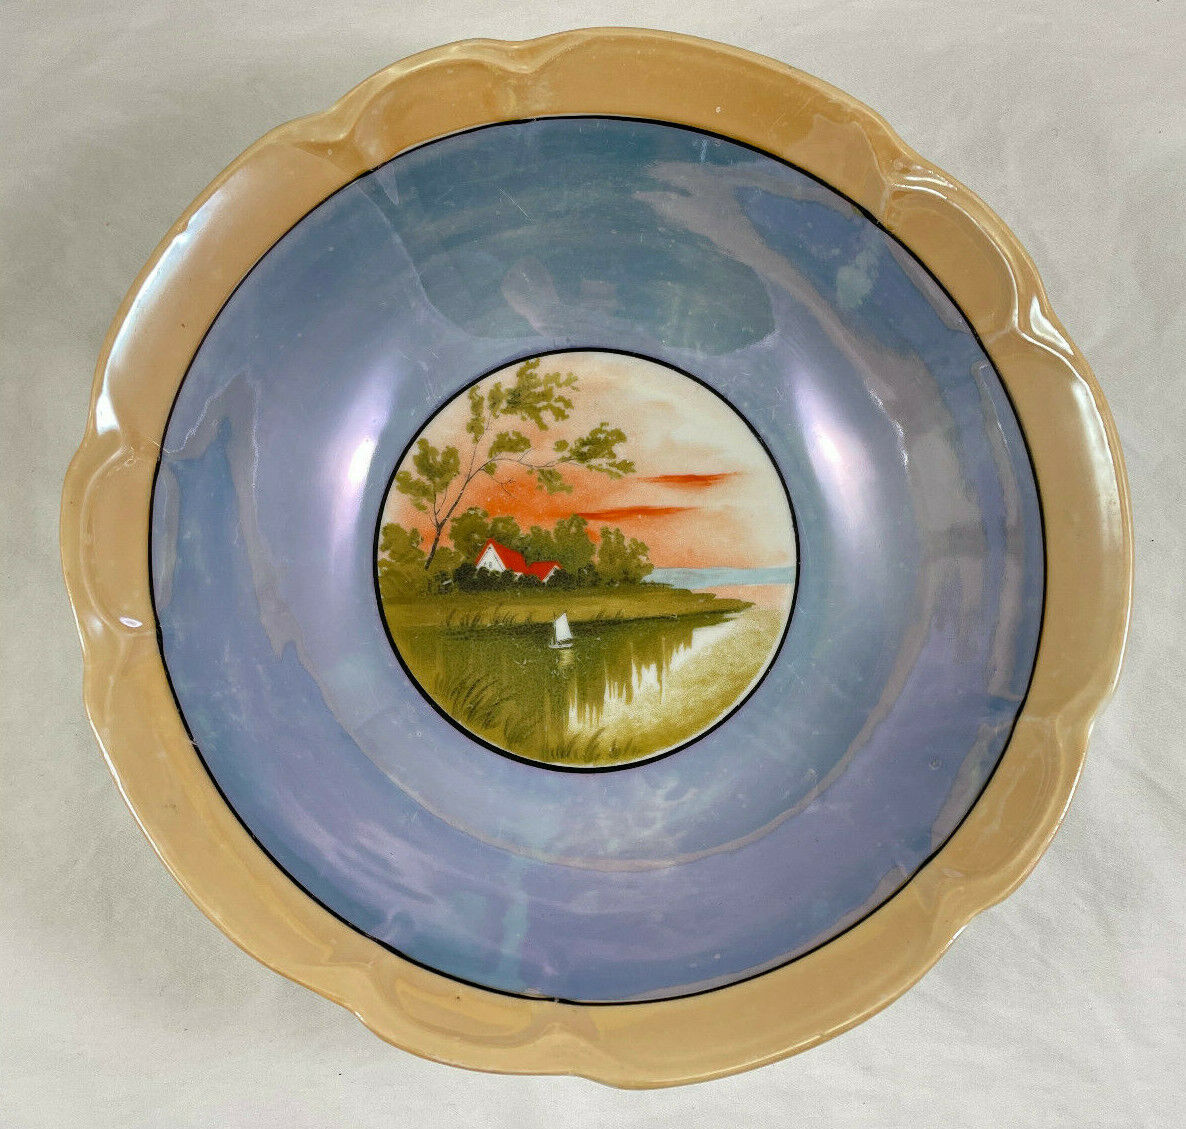 Peach Blue Luster Ware Serving Bowl Landscape Scalloped Japan Vintage 9